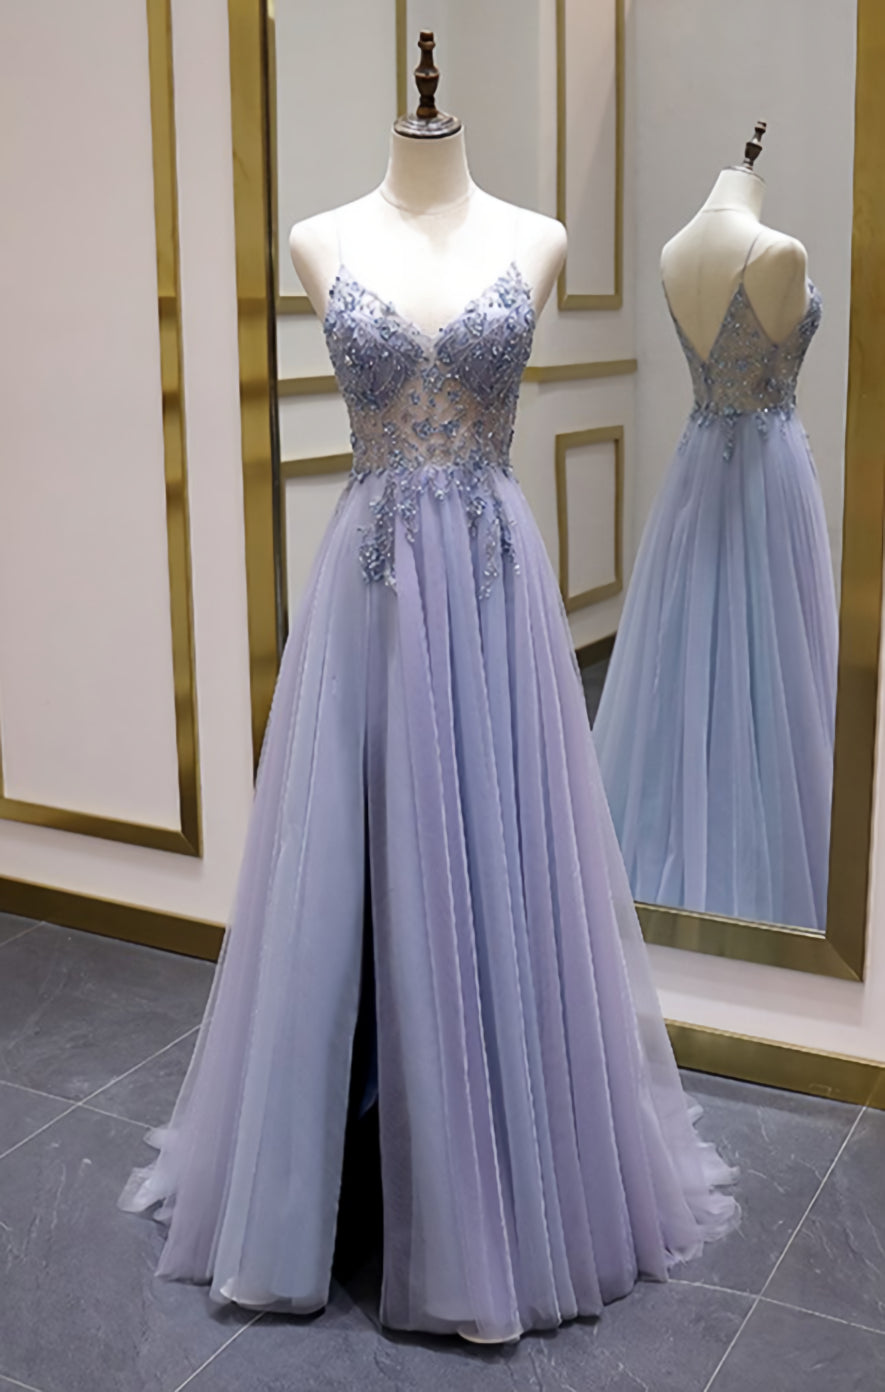 Luxury Beaded A Line Spaghetti Straps Long Prom Dresses For Black girls For Women,Split Tulle Evening Party Dress